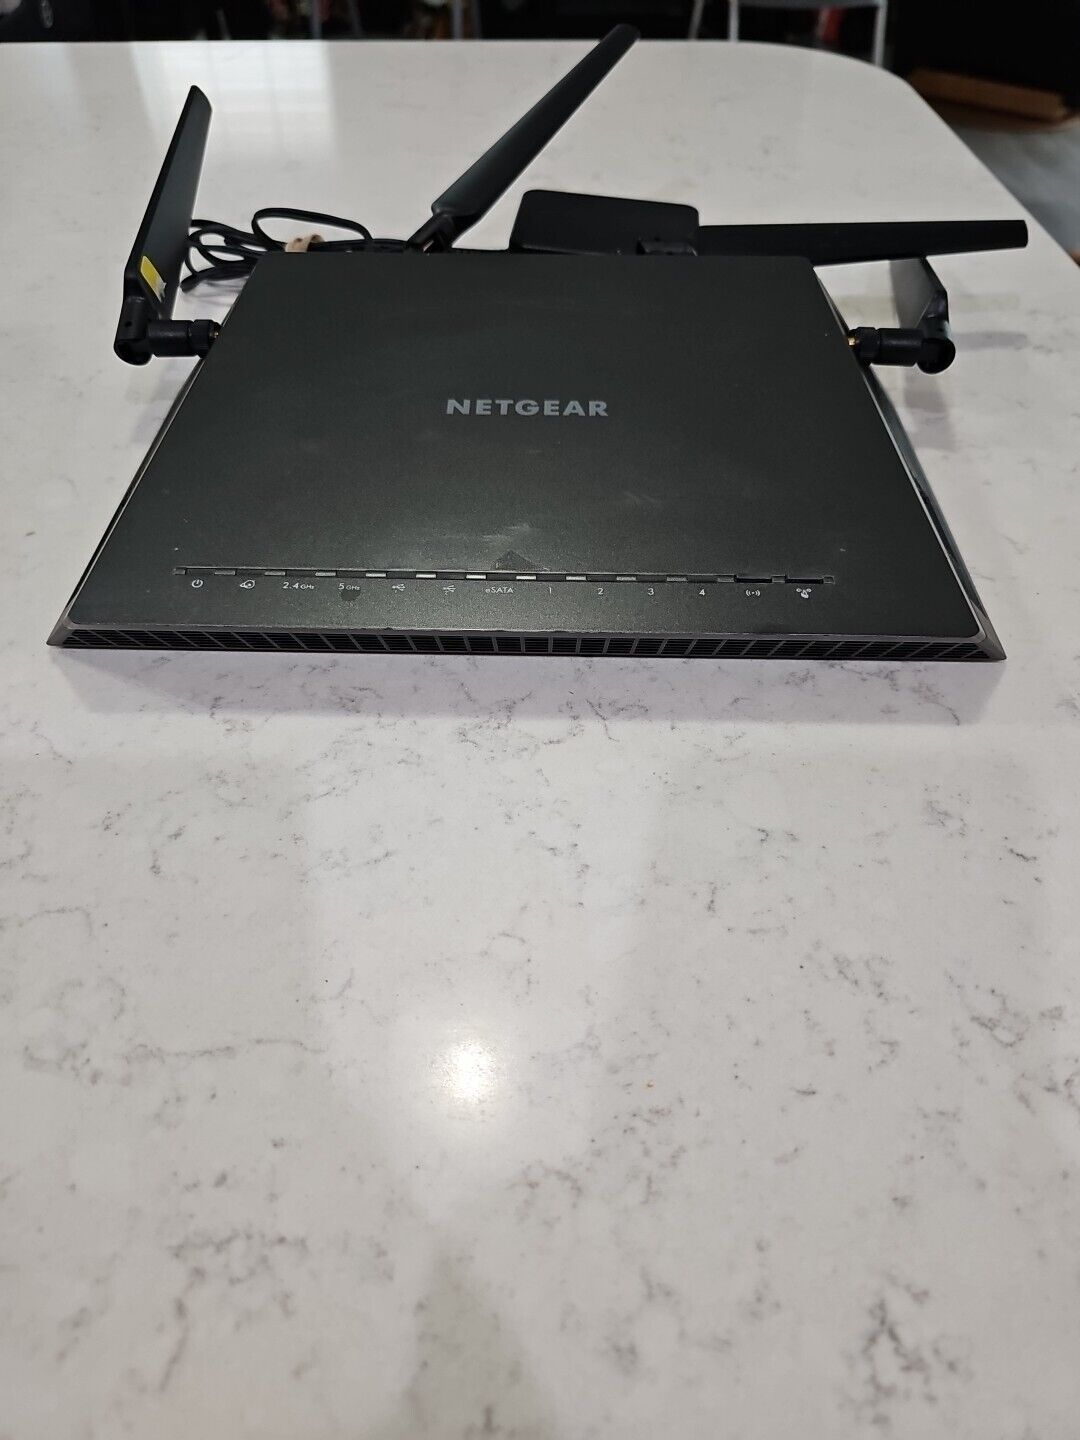 Netgear R7500v2 Nighthawk X4 AC2350 Dual Band Smart Wi-Fi Router w/ Adapter